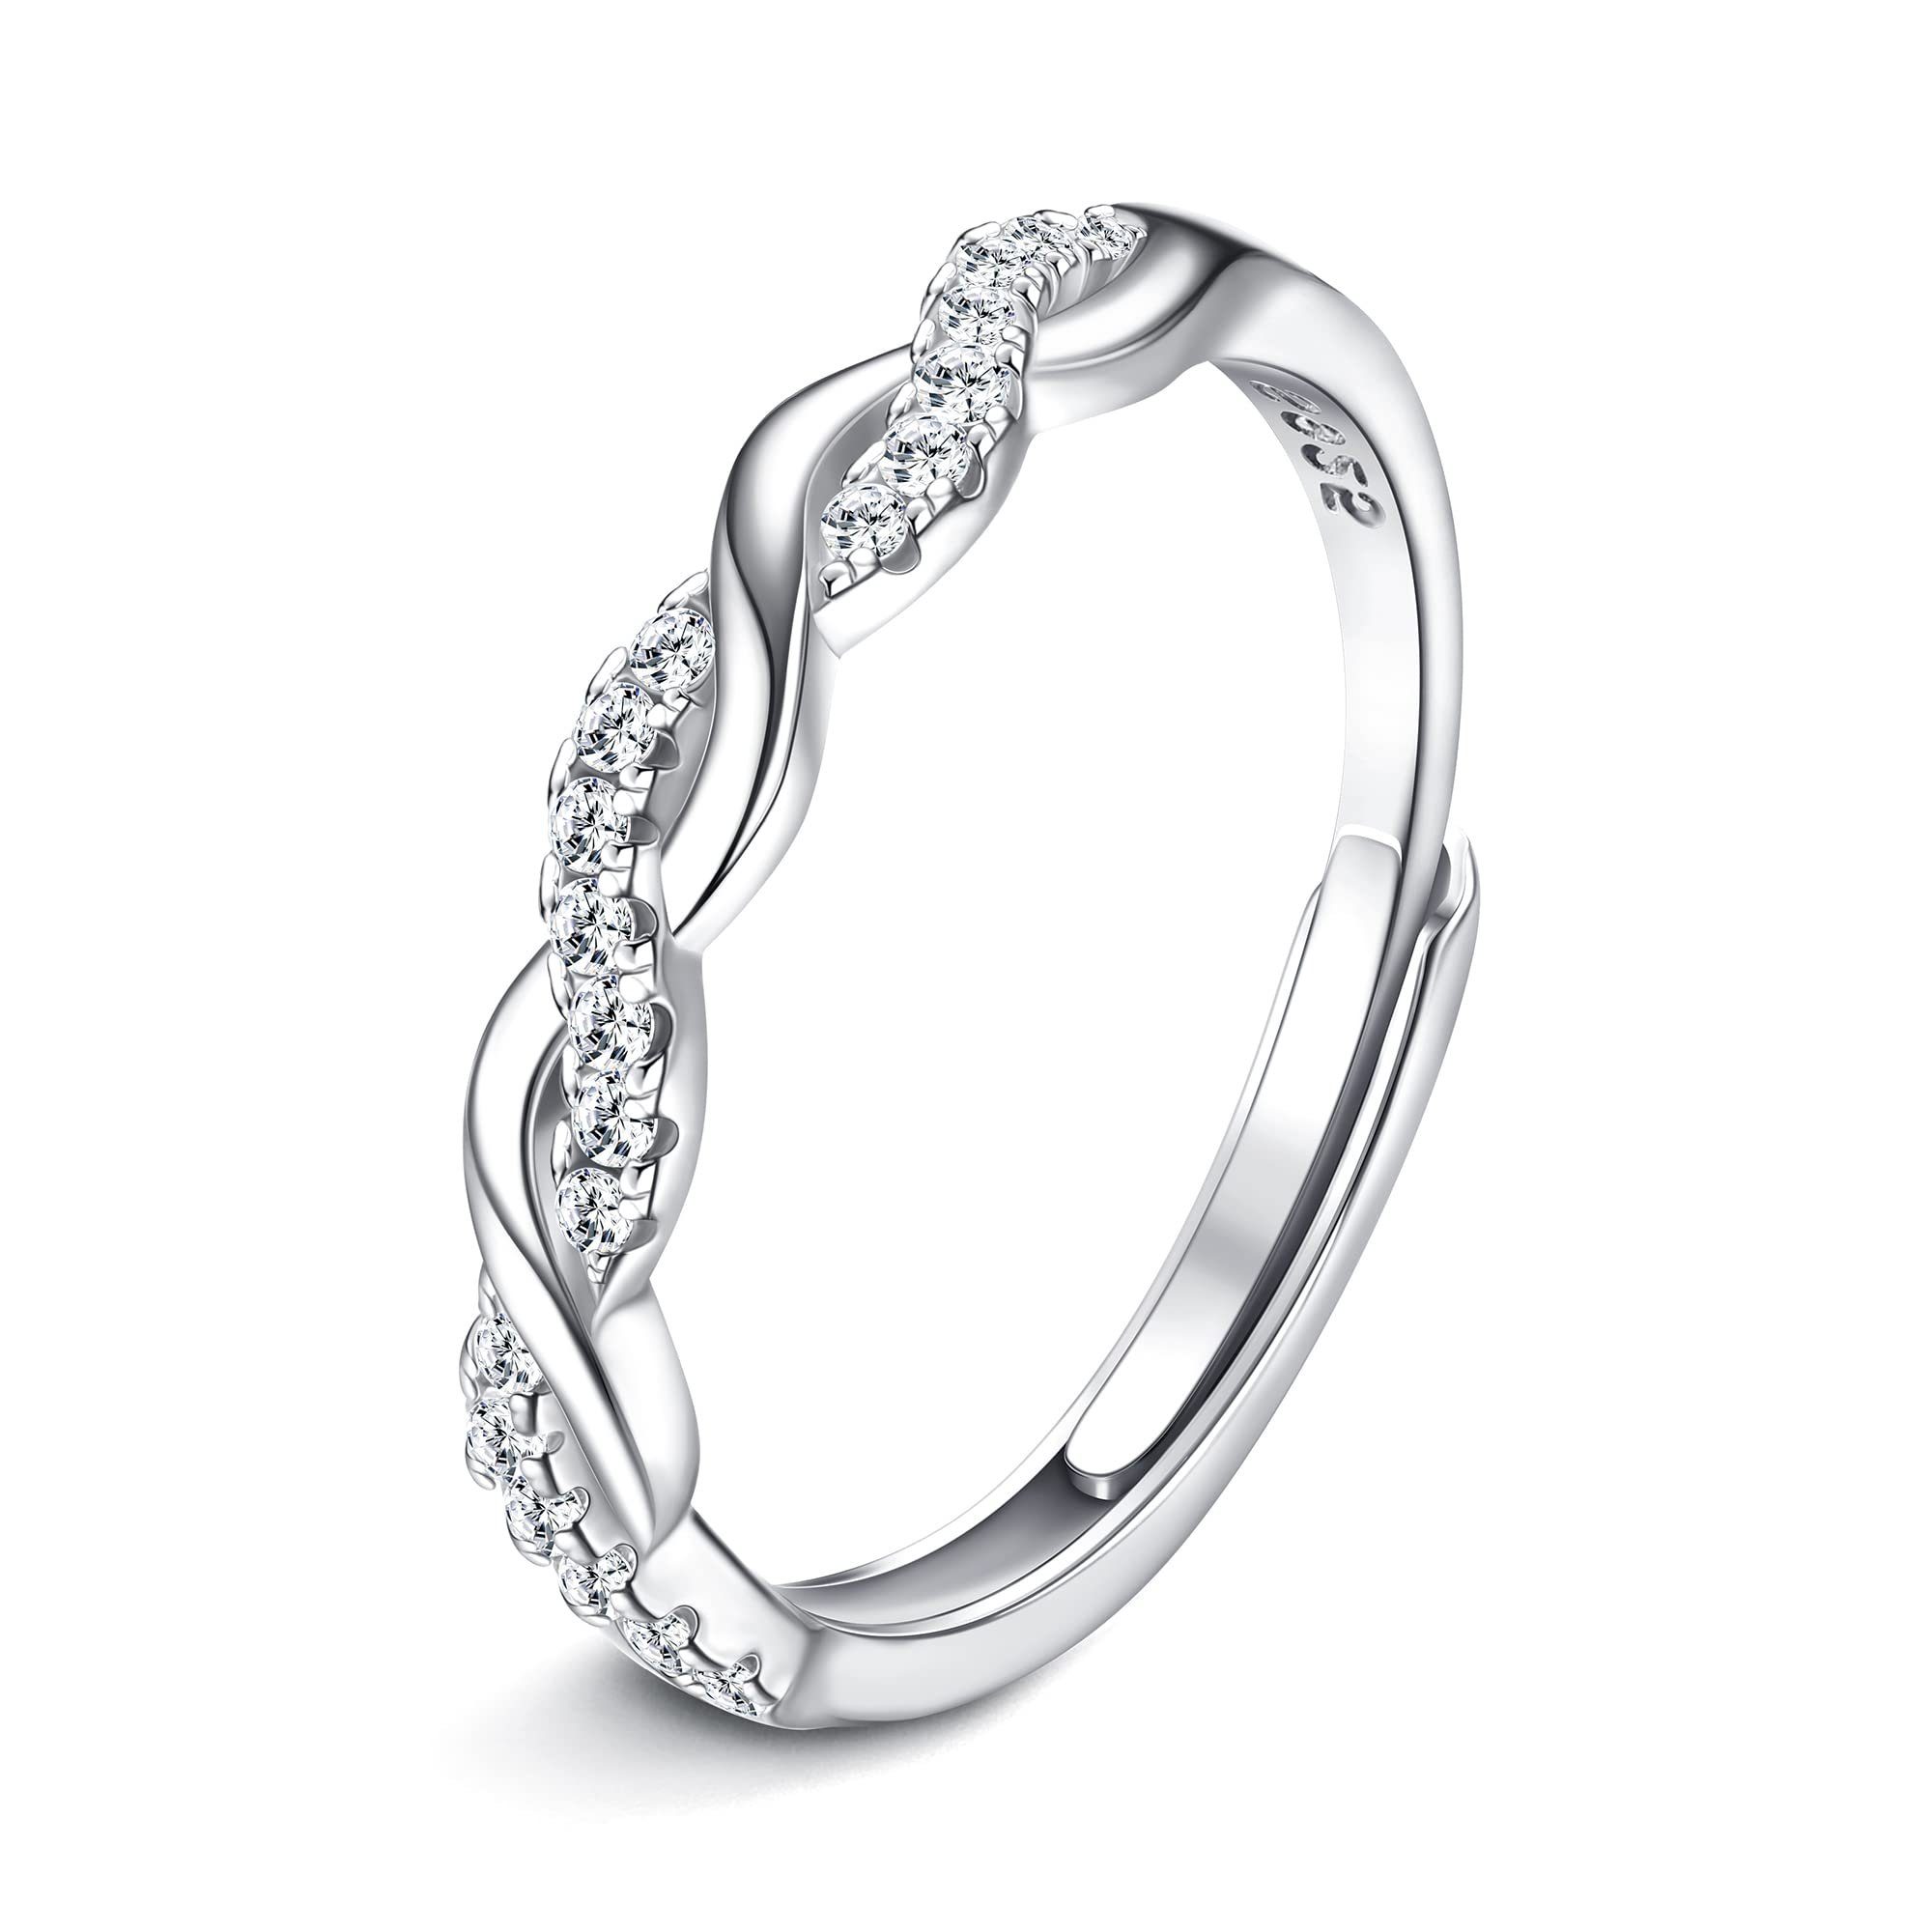 POCHUMIDUU Fingerring s925 Silber Twist Ring für Frauen